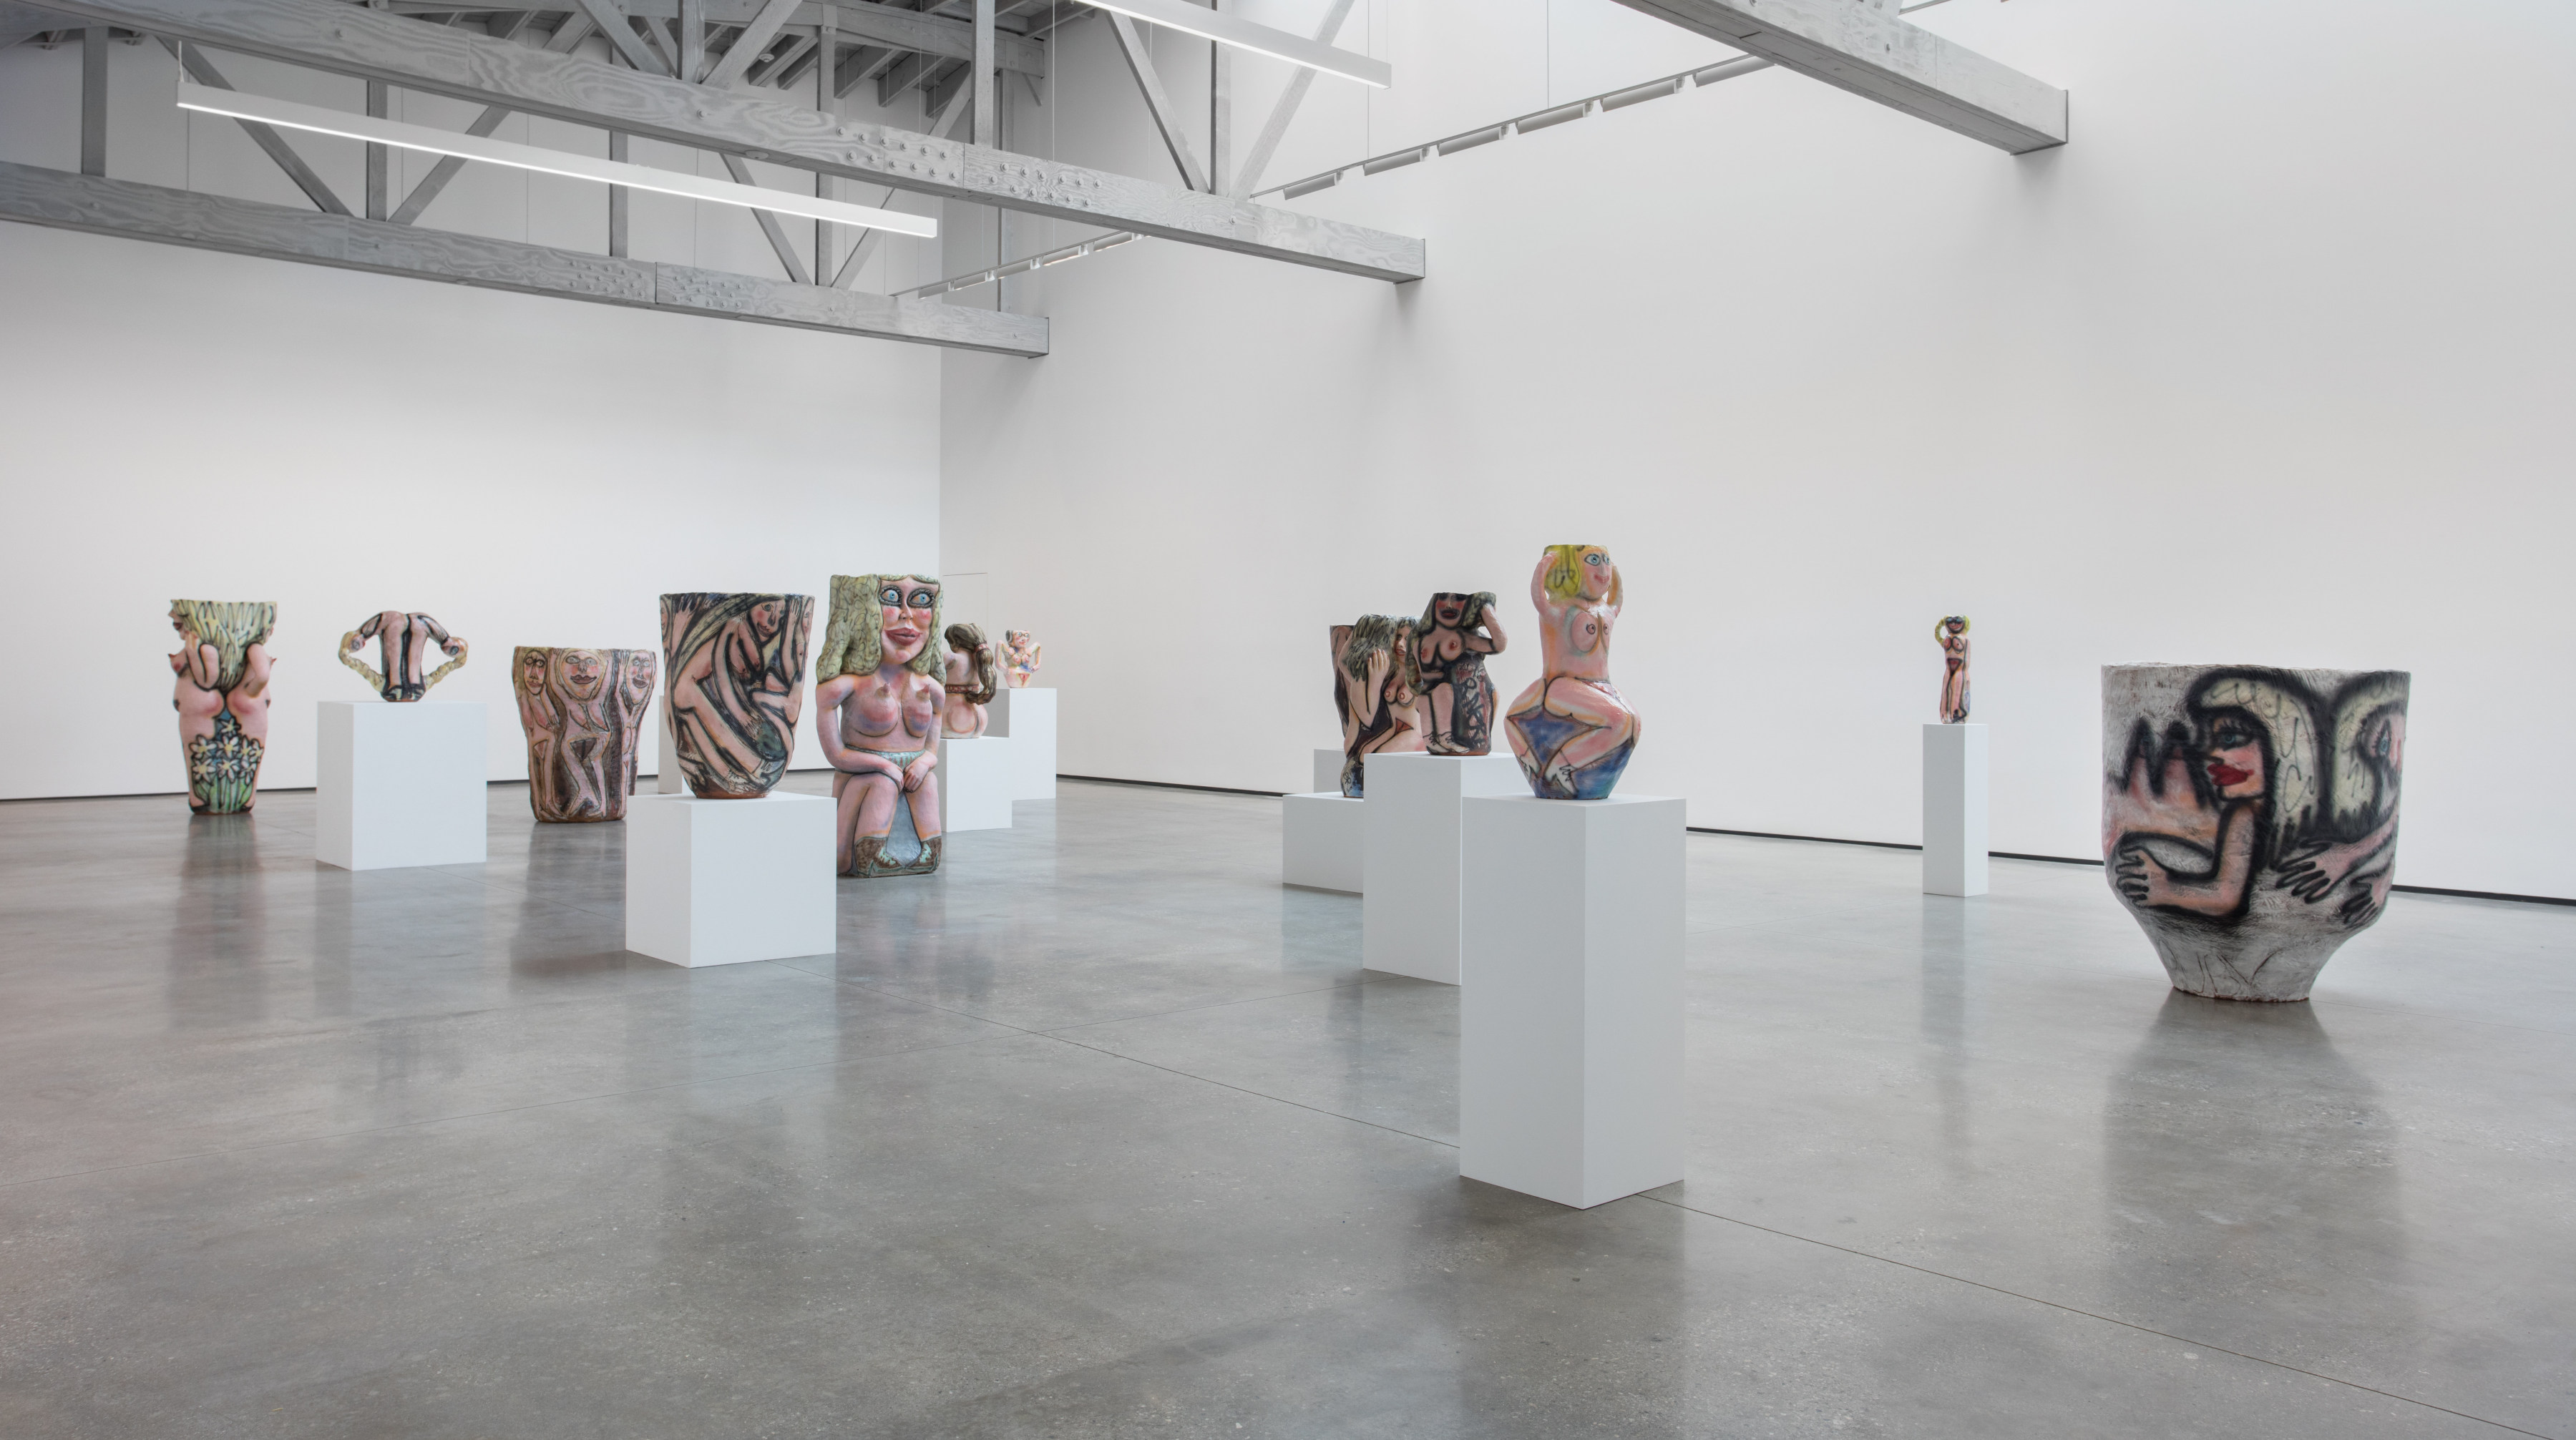 Ruby Neri,&nbsp;&nbsp;Slaves and Humans,&nbsp; 2016, David Kordansky Gallery, Los Angeles, CA, installation view.